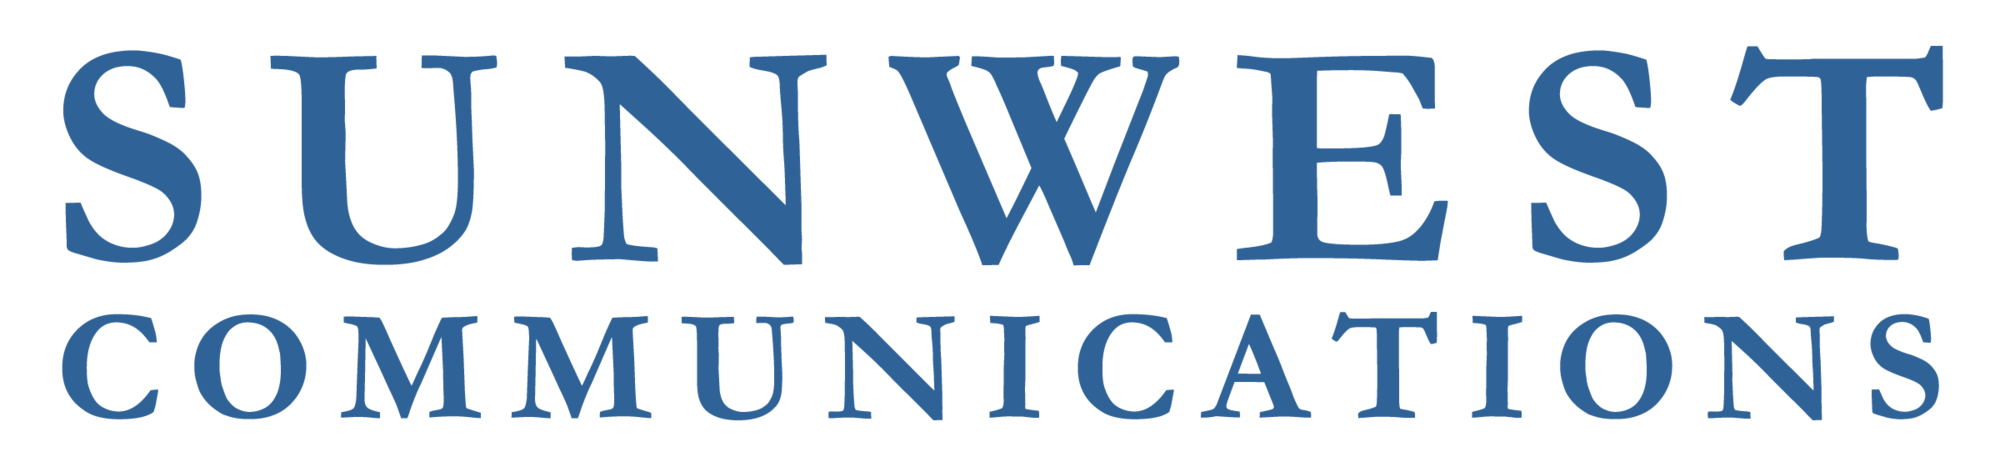 04.3_Sunwest Communications logo